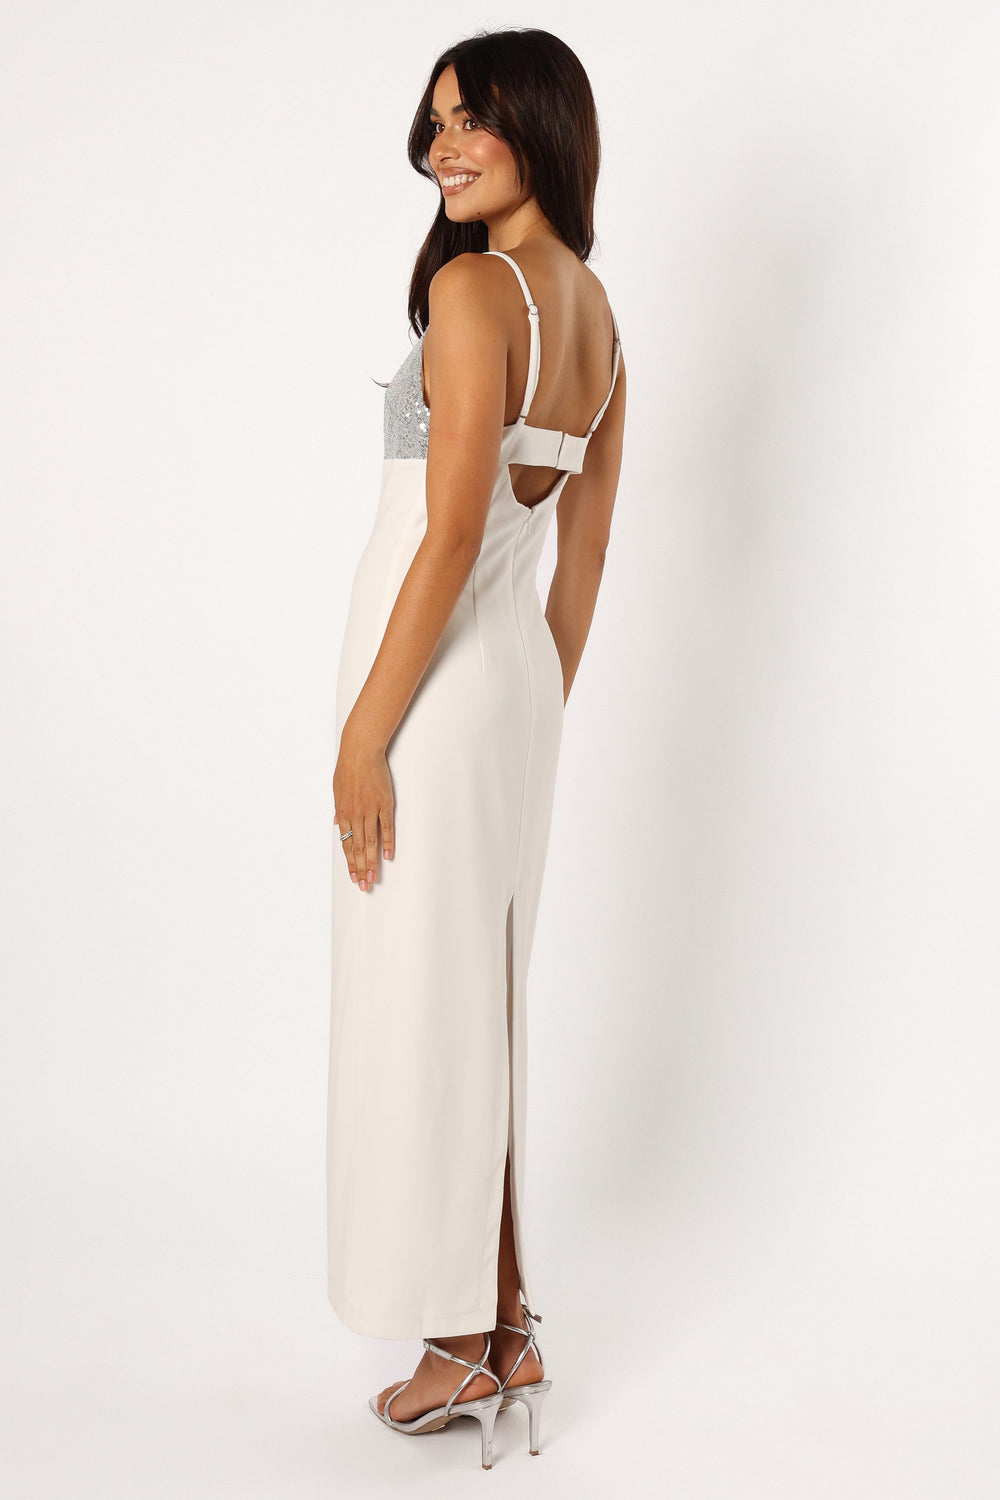 Shop Formal Dress - Kylie Slip Dress - White Silver third image